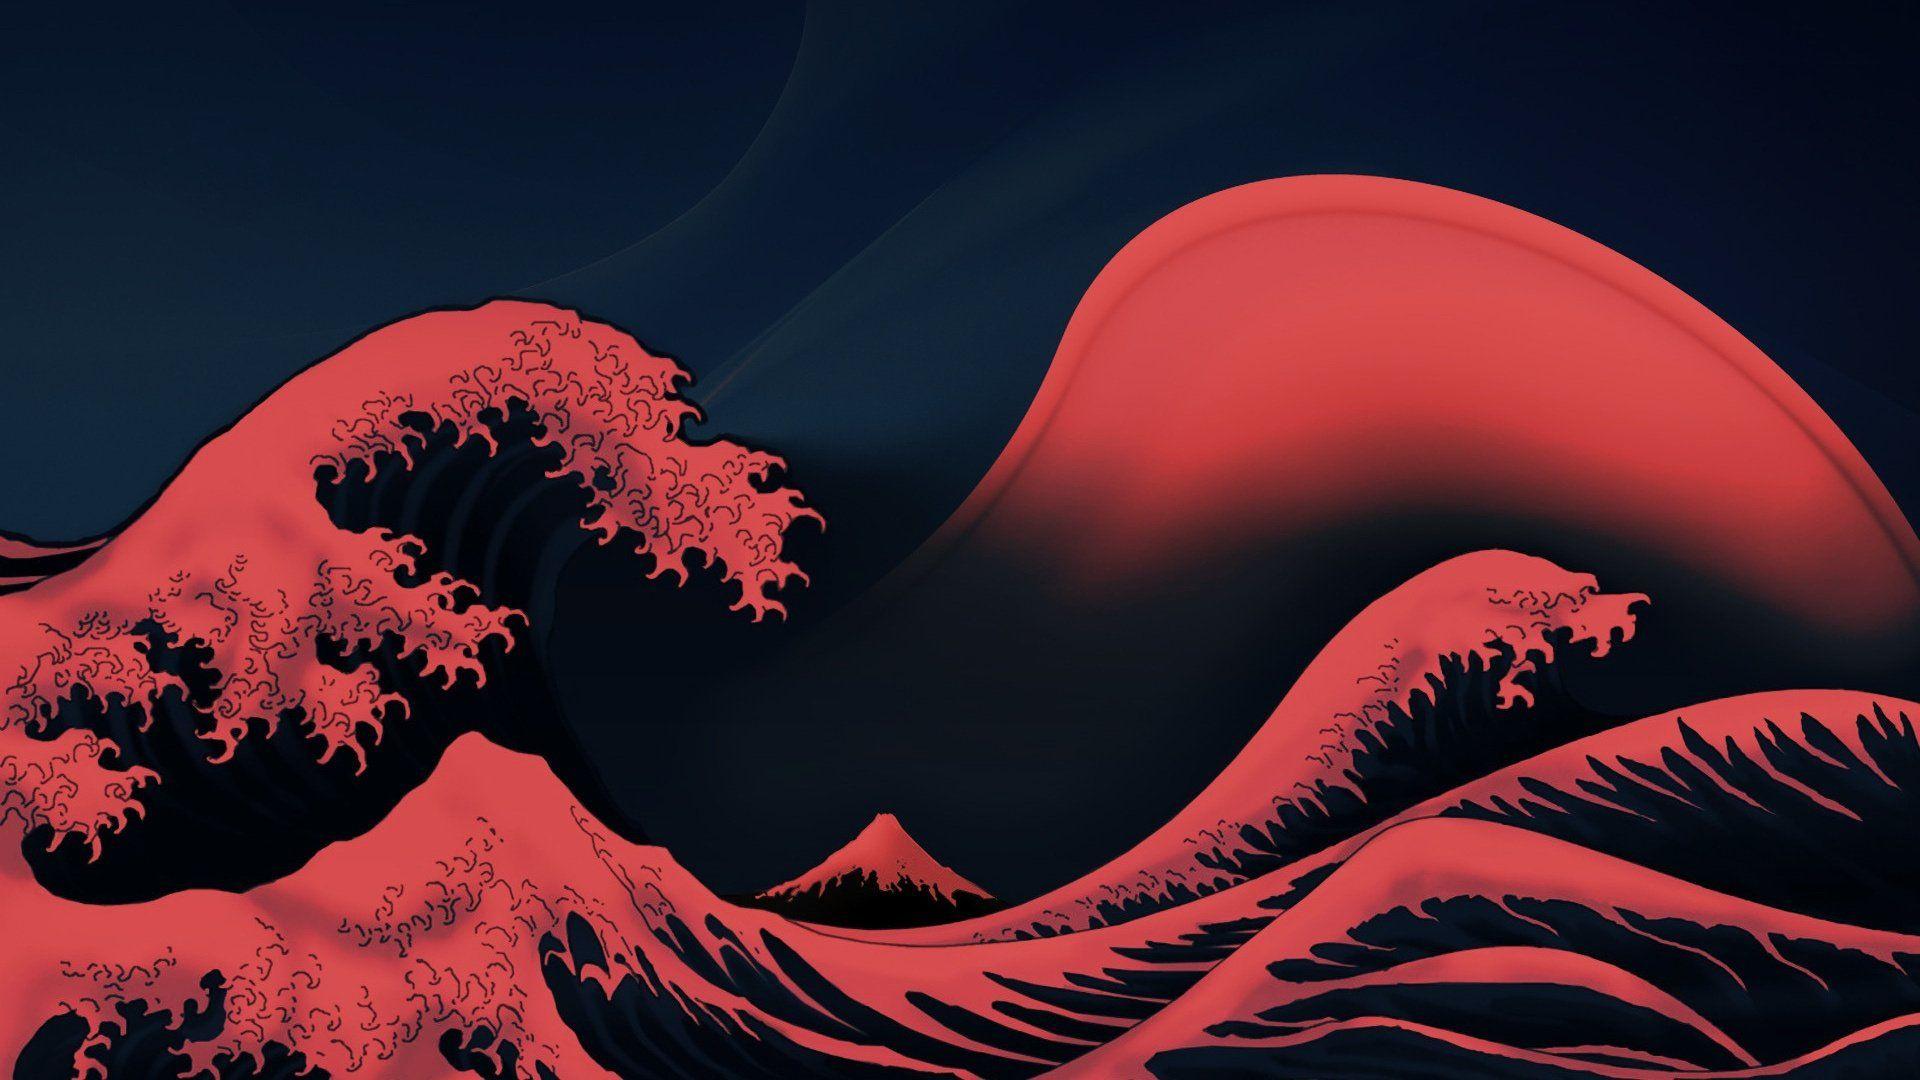 Dark Red Aesthetic Desktop Wallpapers - Top Free Dark Red Aesthetic